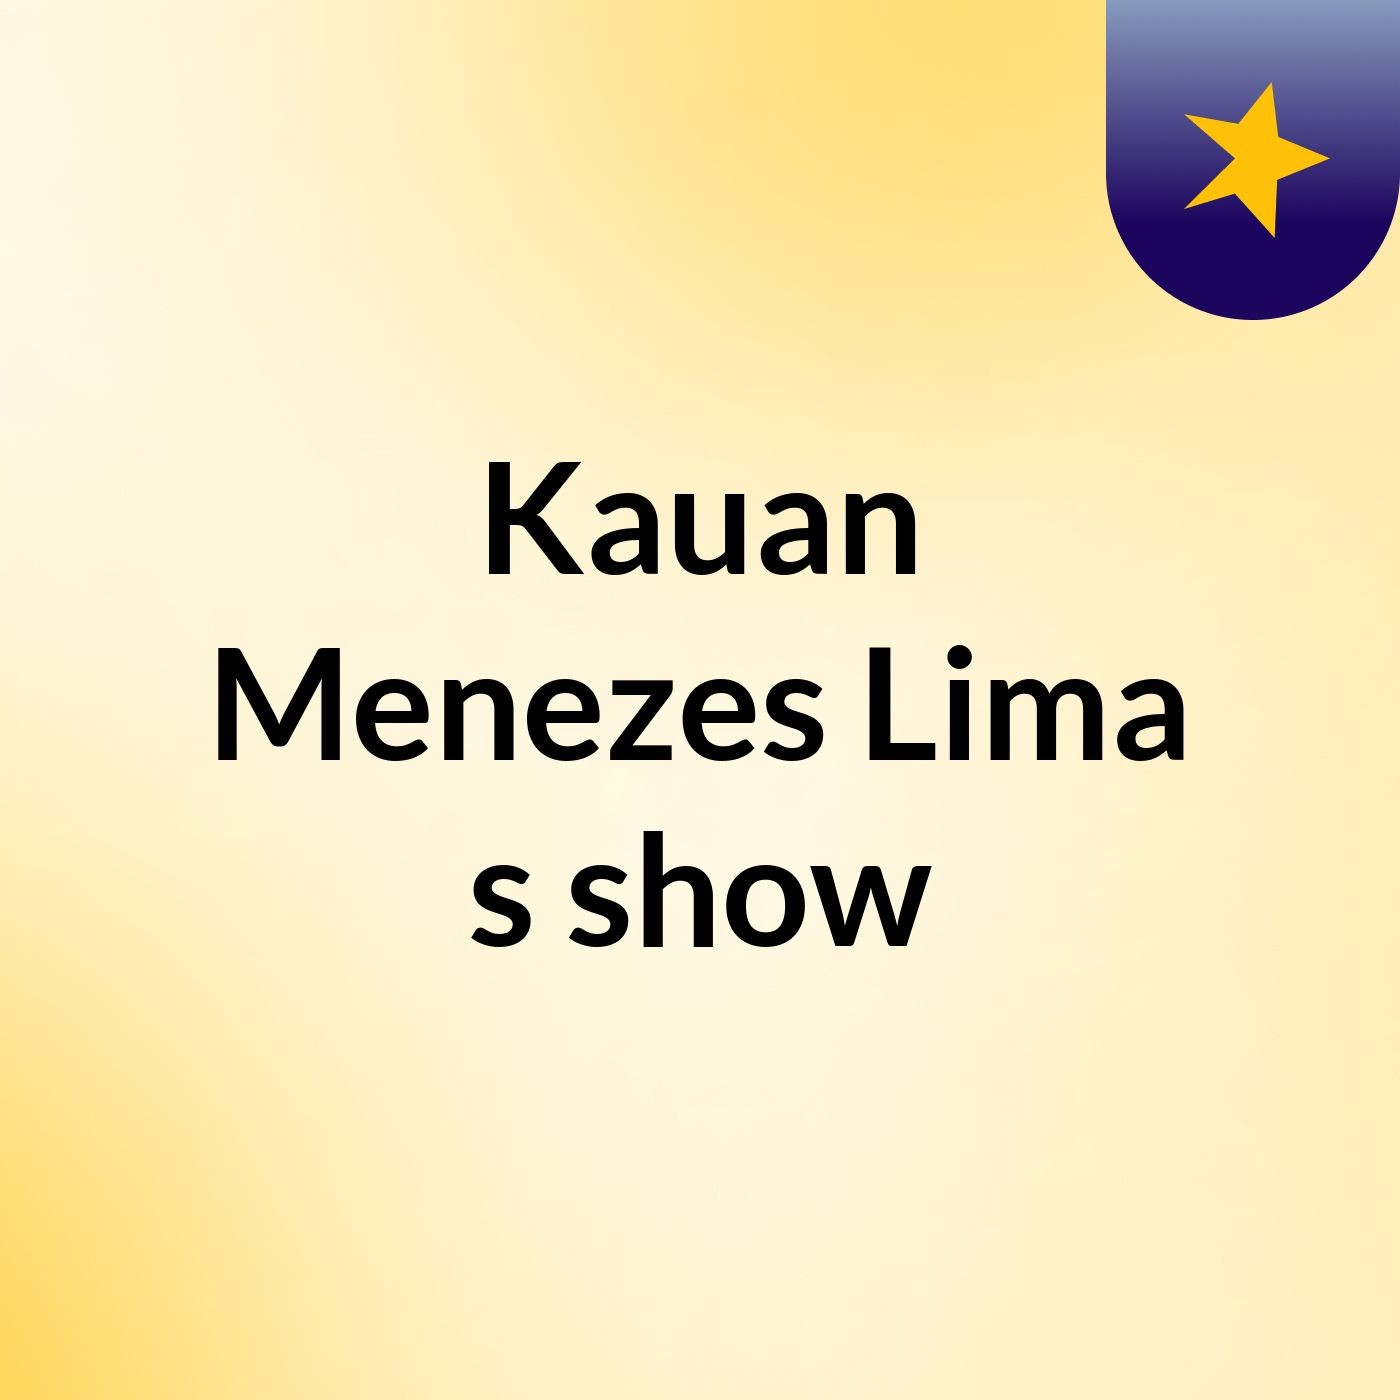 Kauan Menezes Lima's show